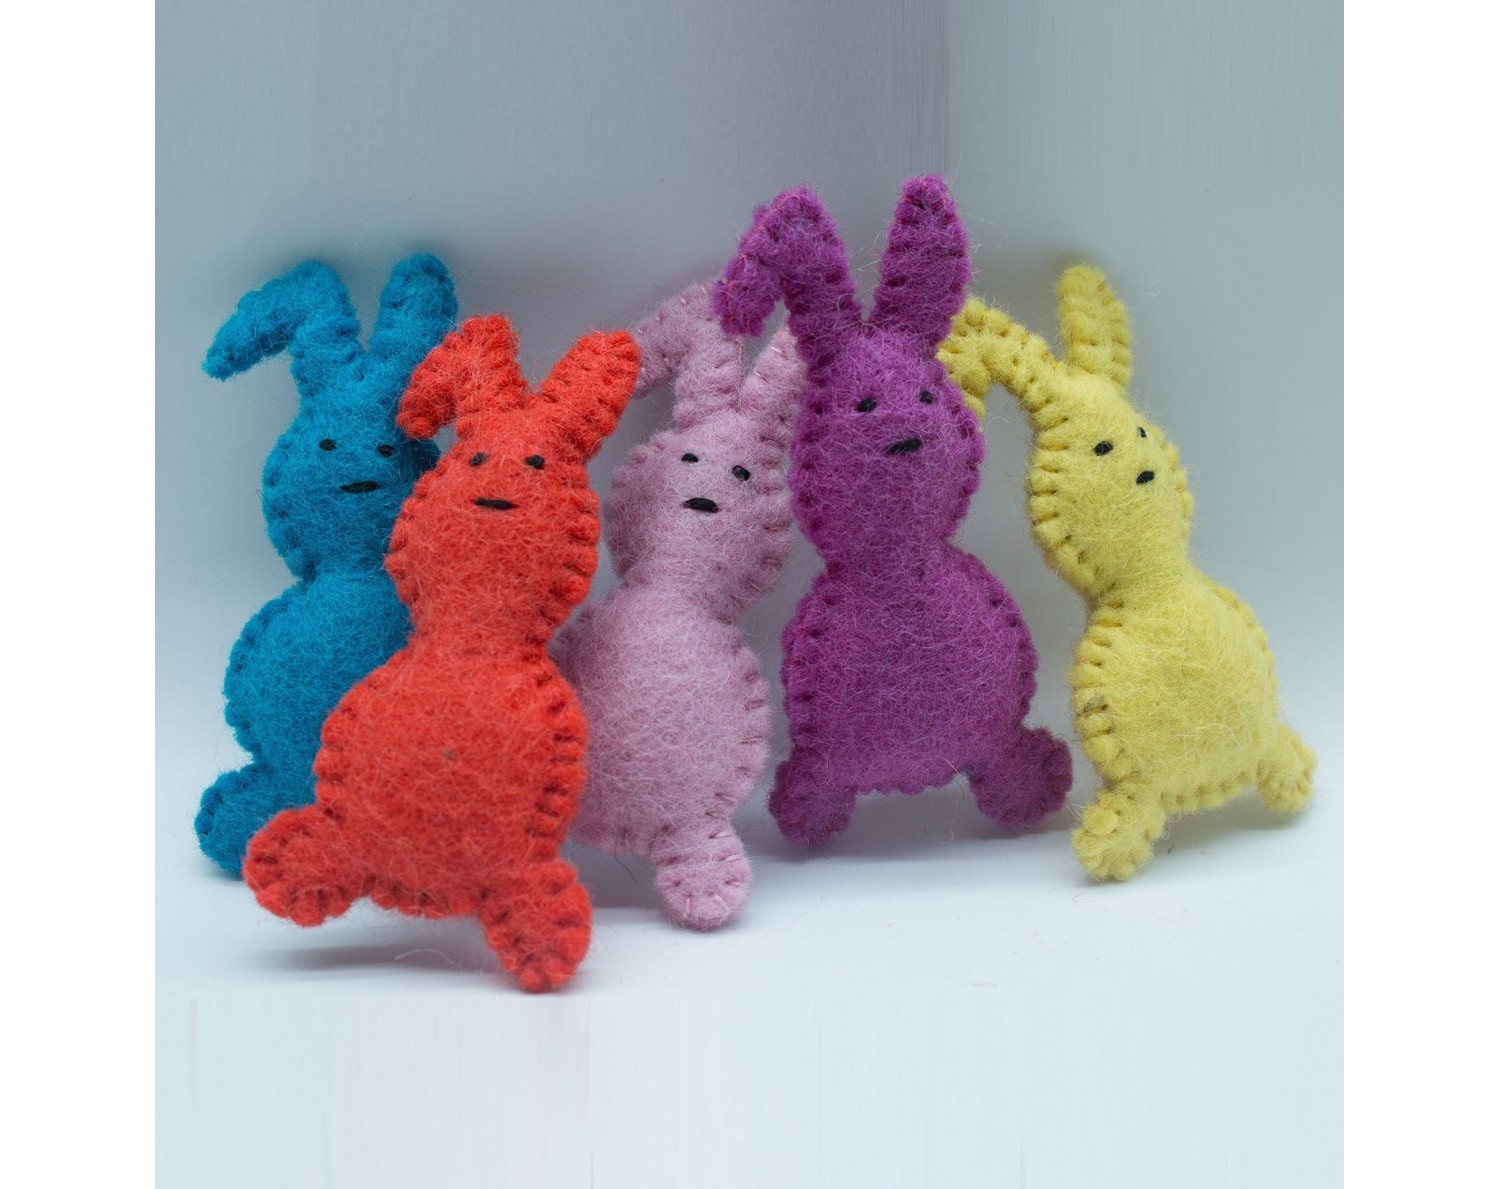 Felt Stitched Easter Bunny for Decoration - Felt & Yarn